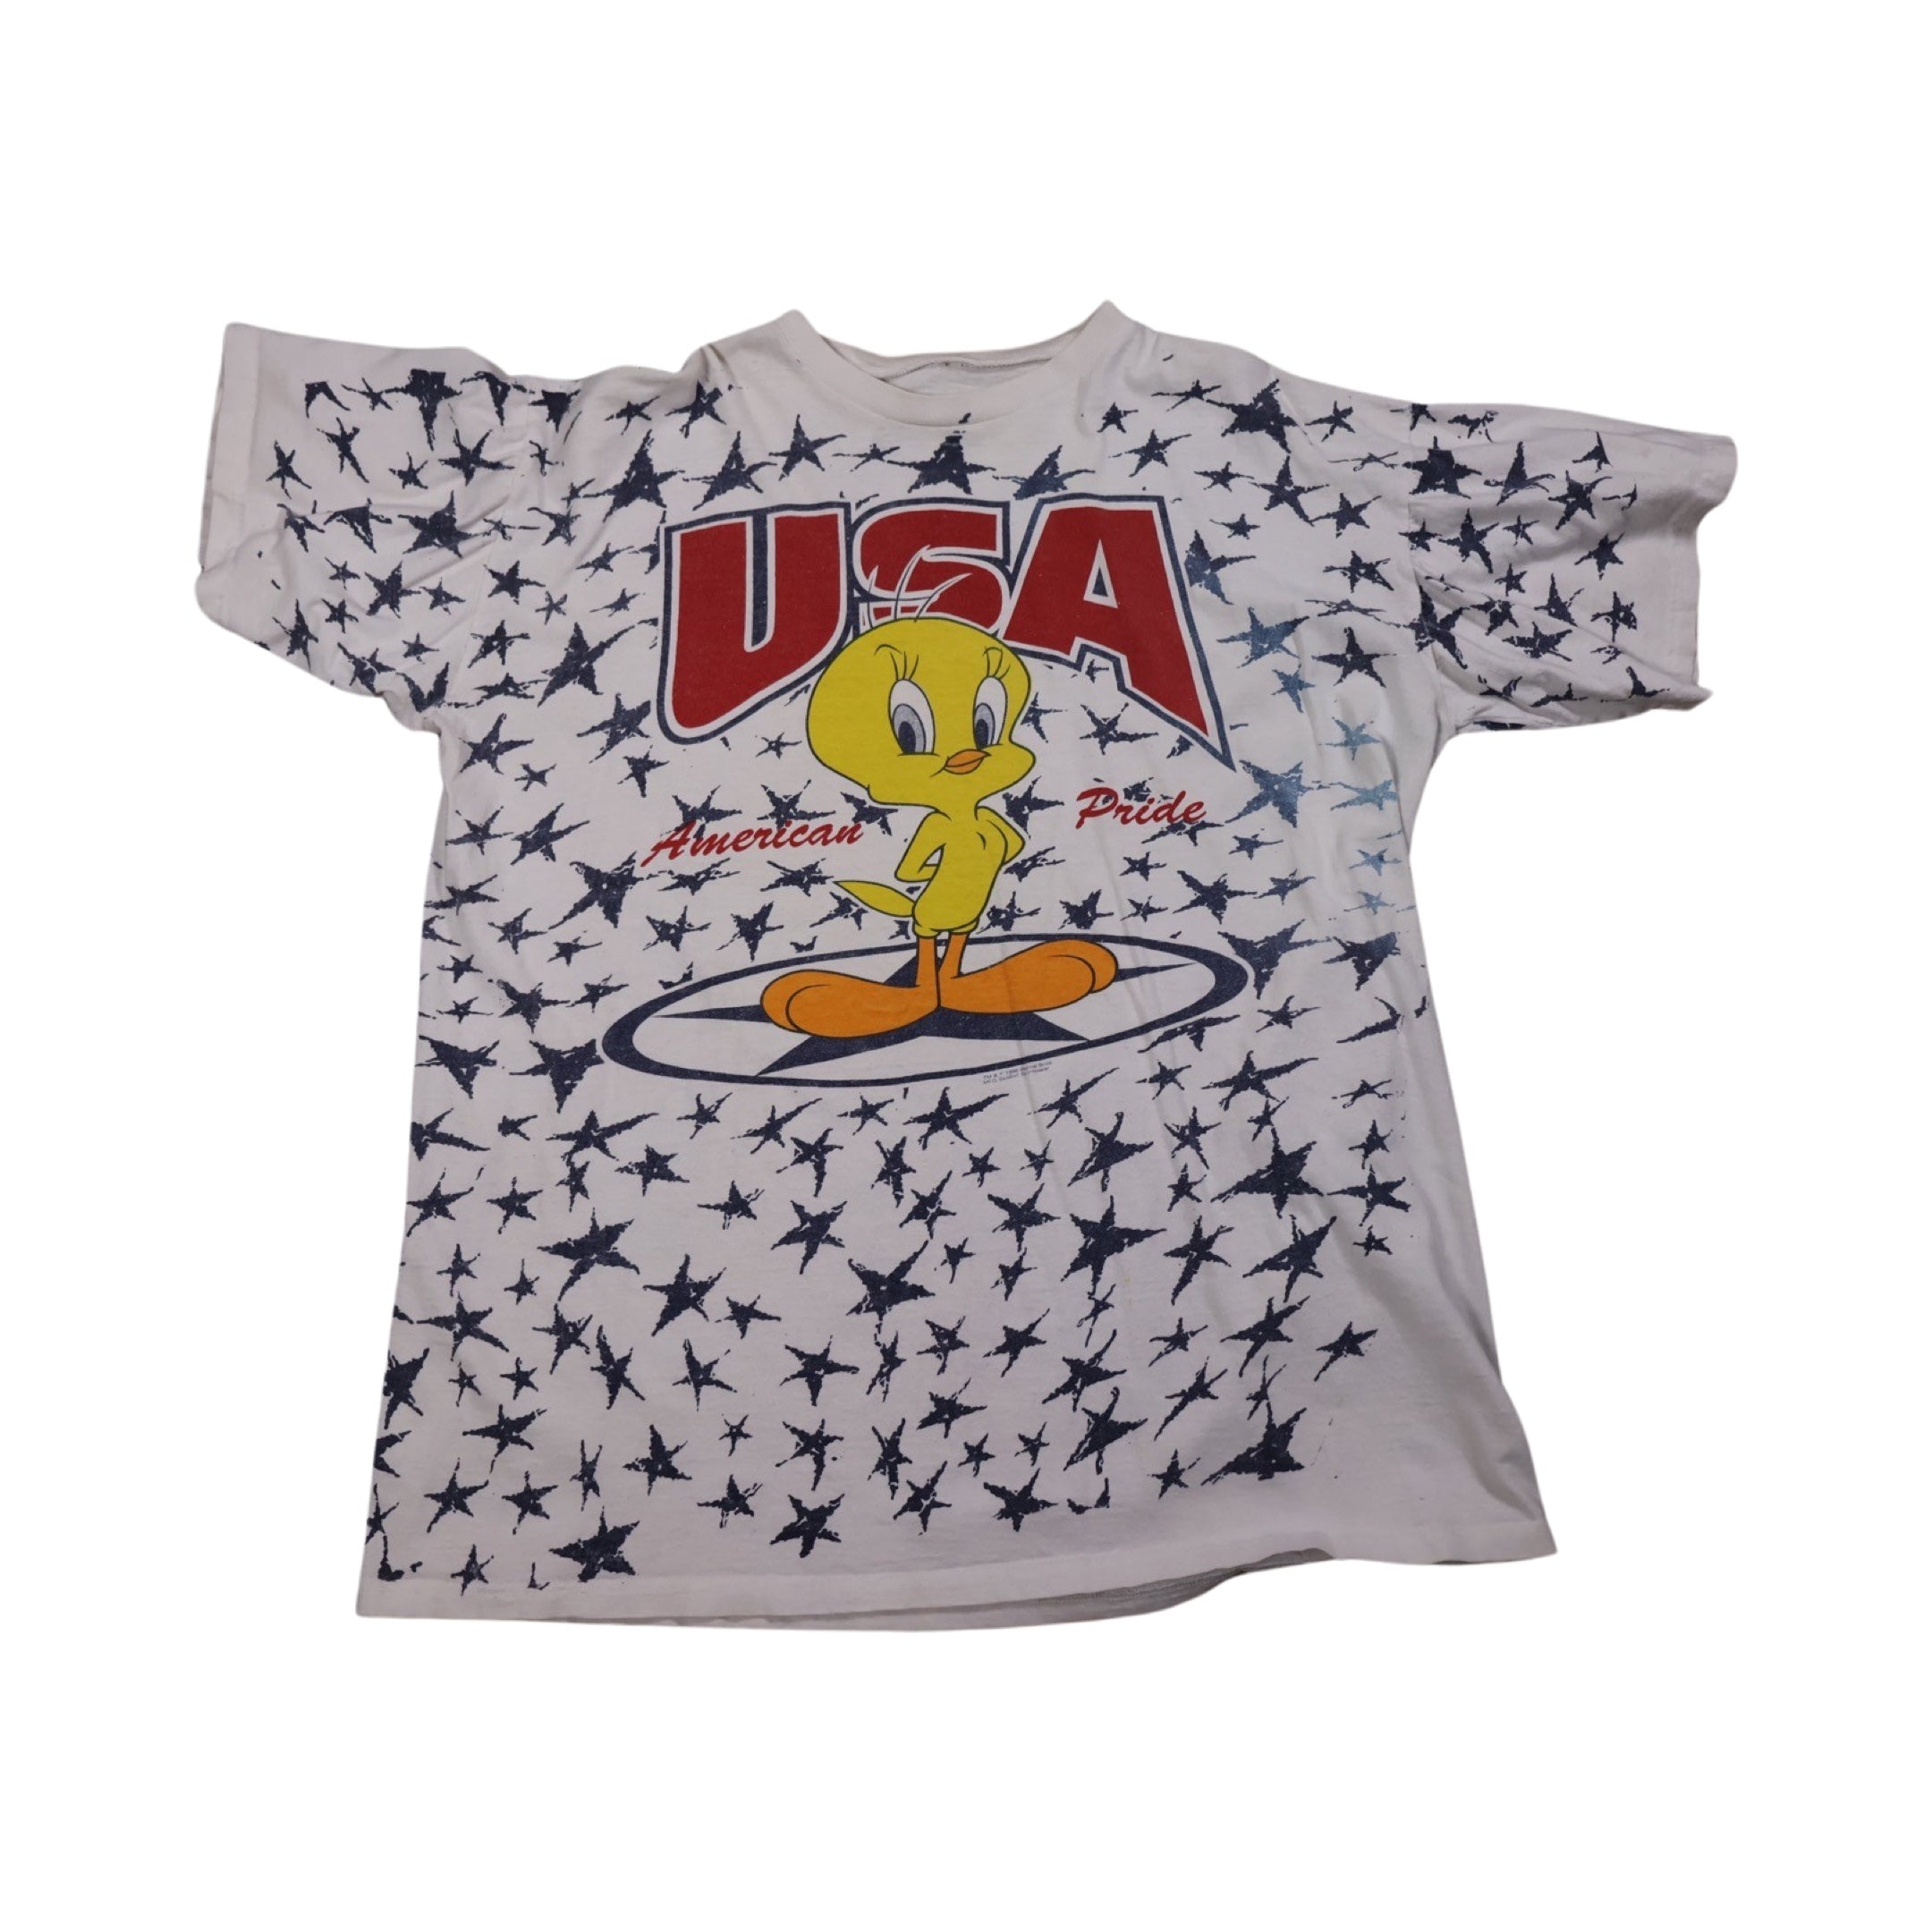 Tweety USA All-Over-Print 1996 T-Shirt (XXL)